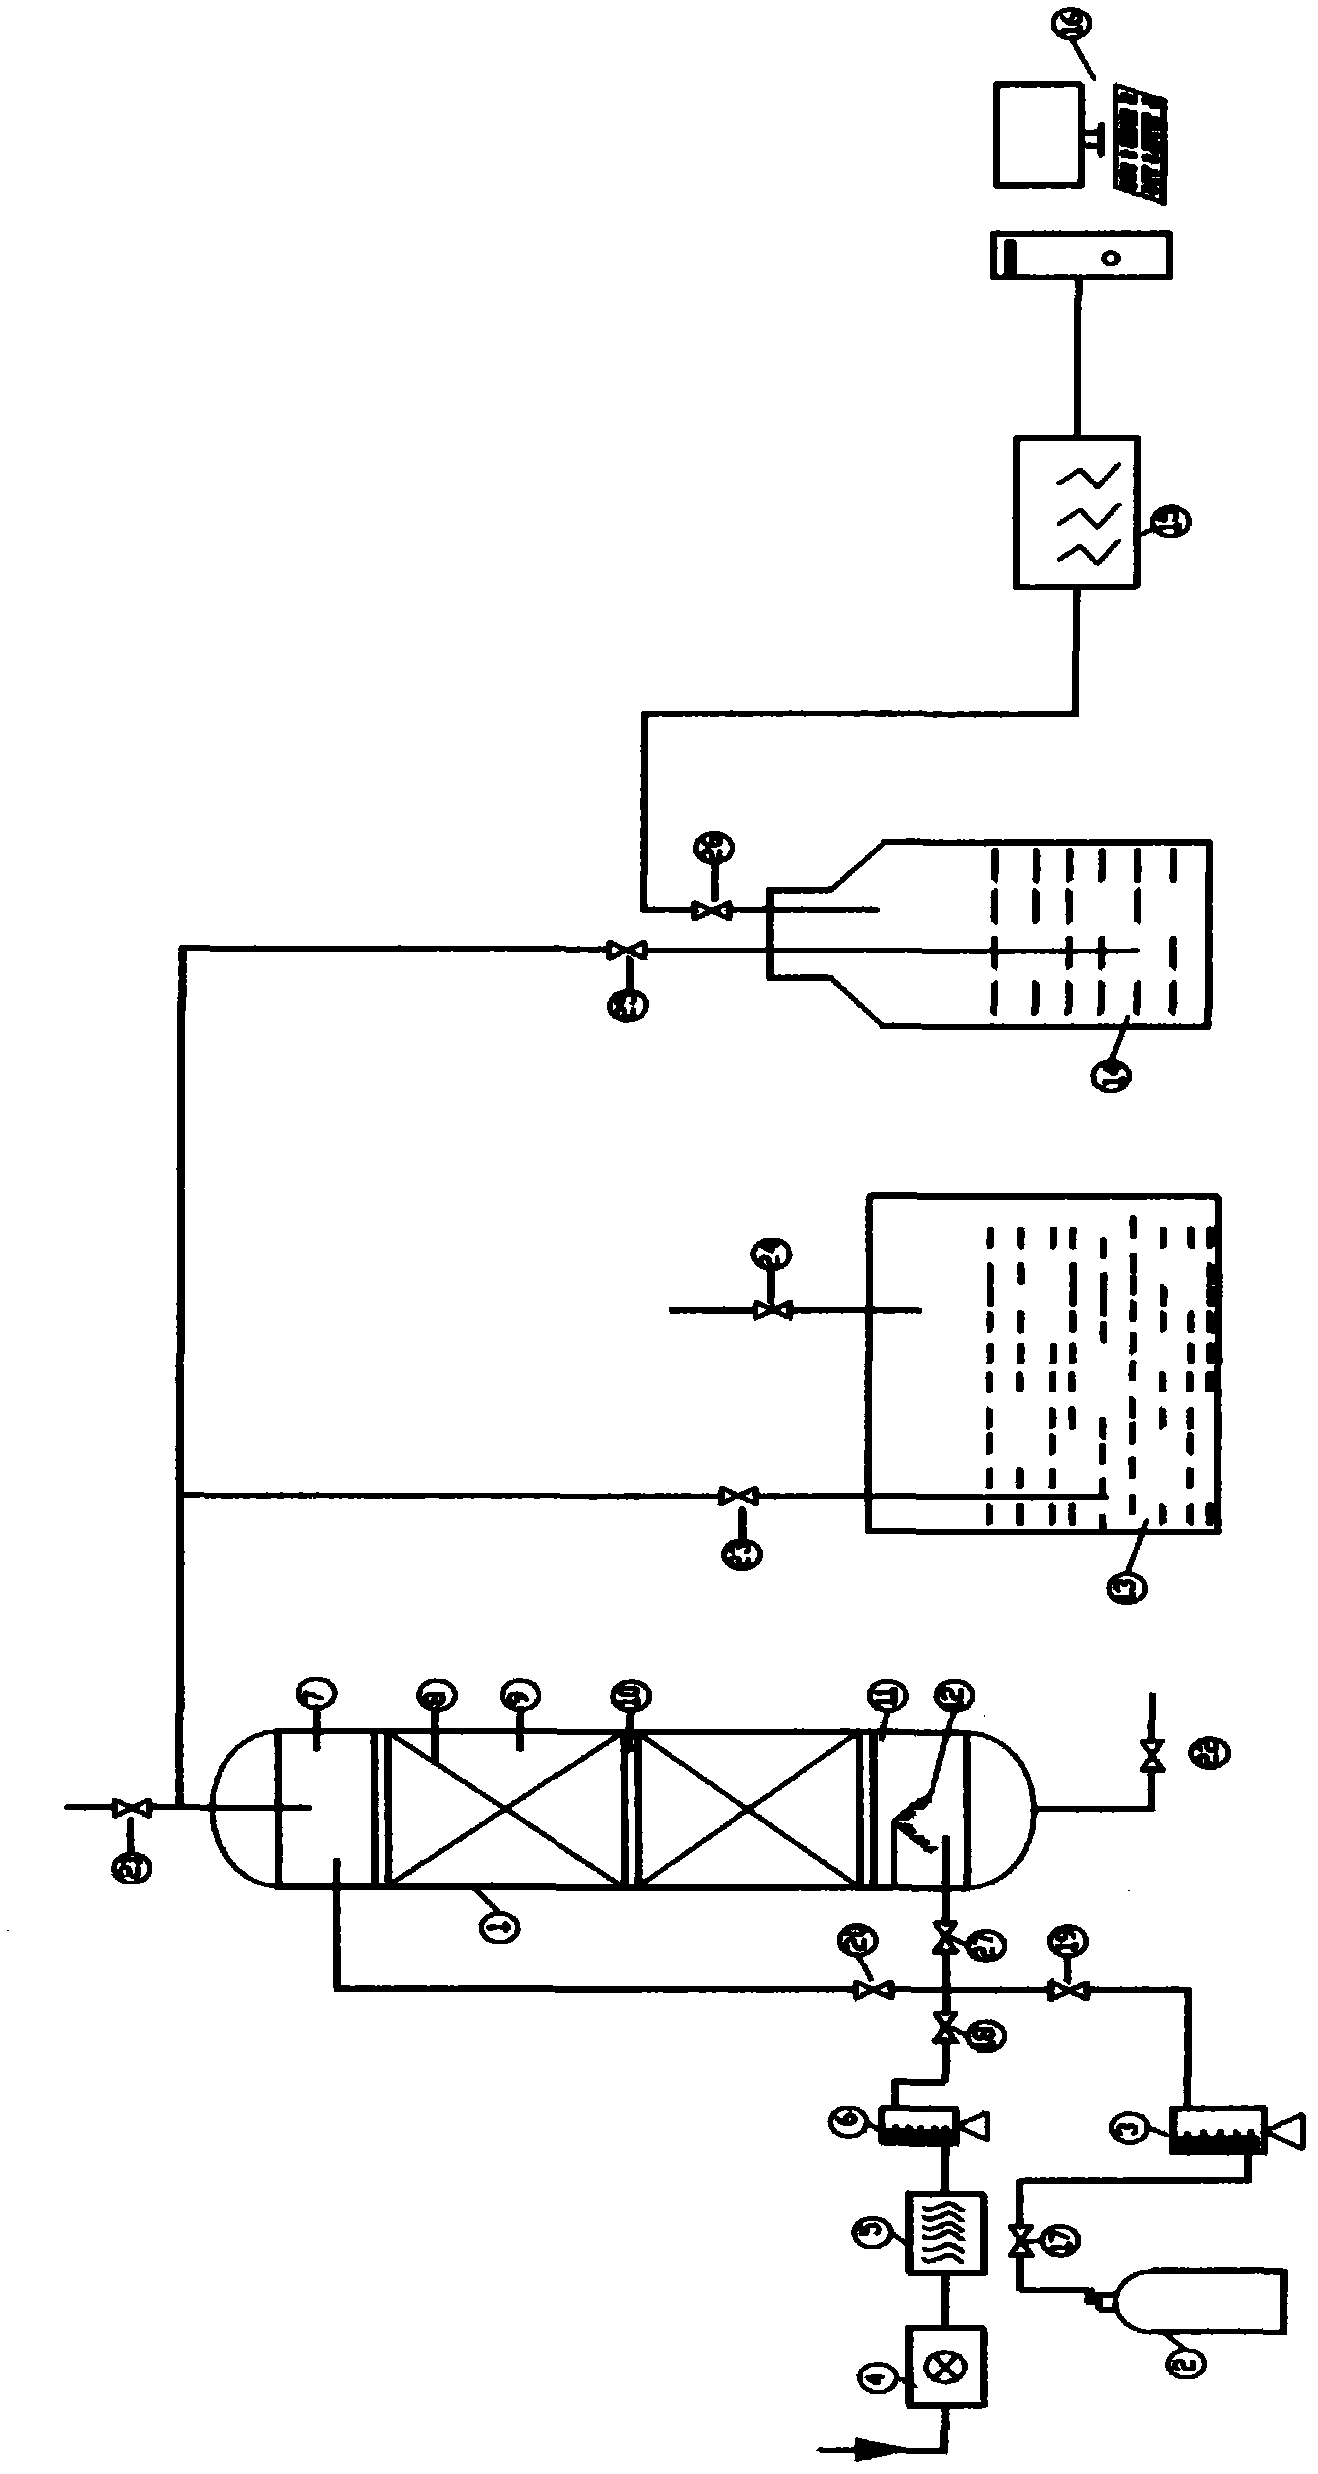 Ferrous sulfide gas phase passivation device